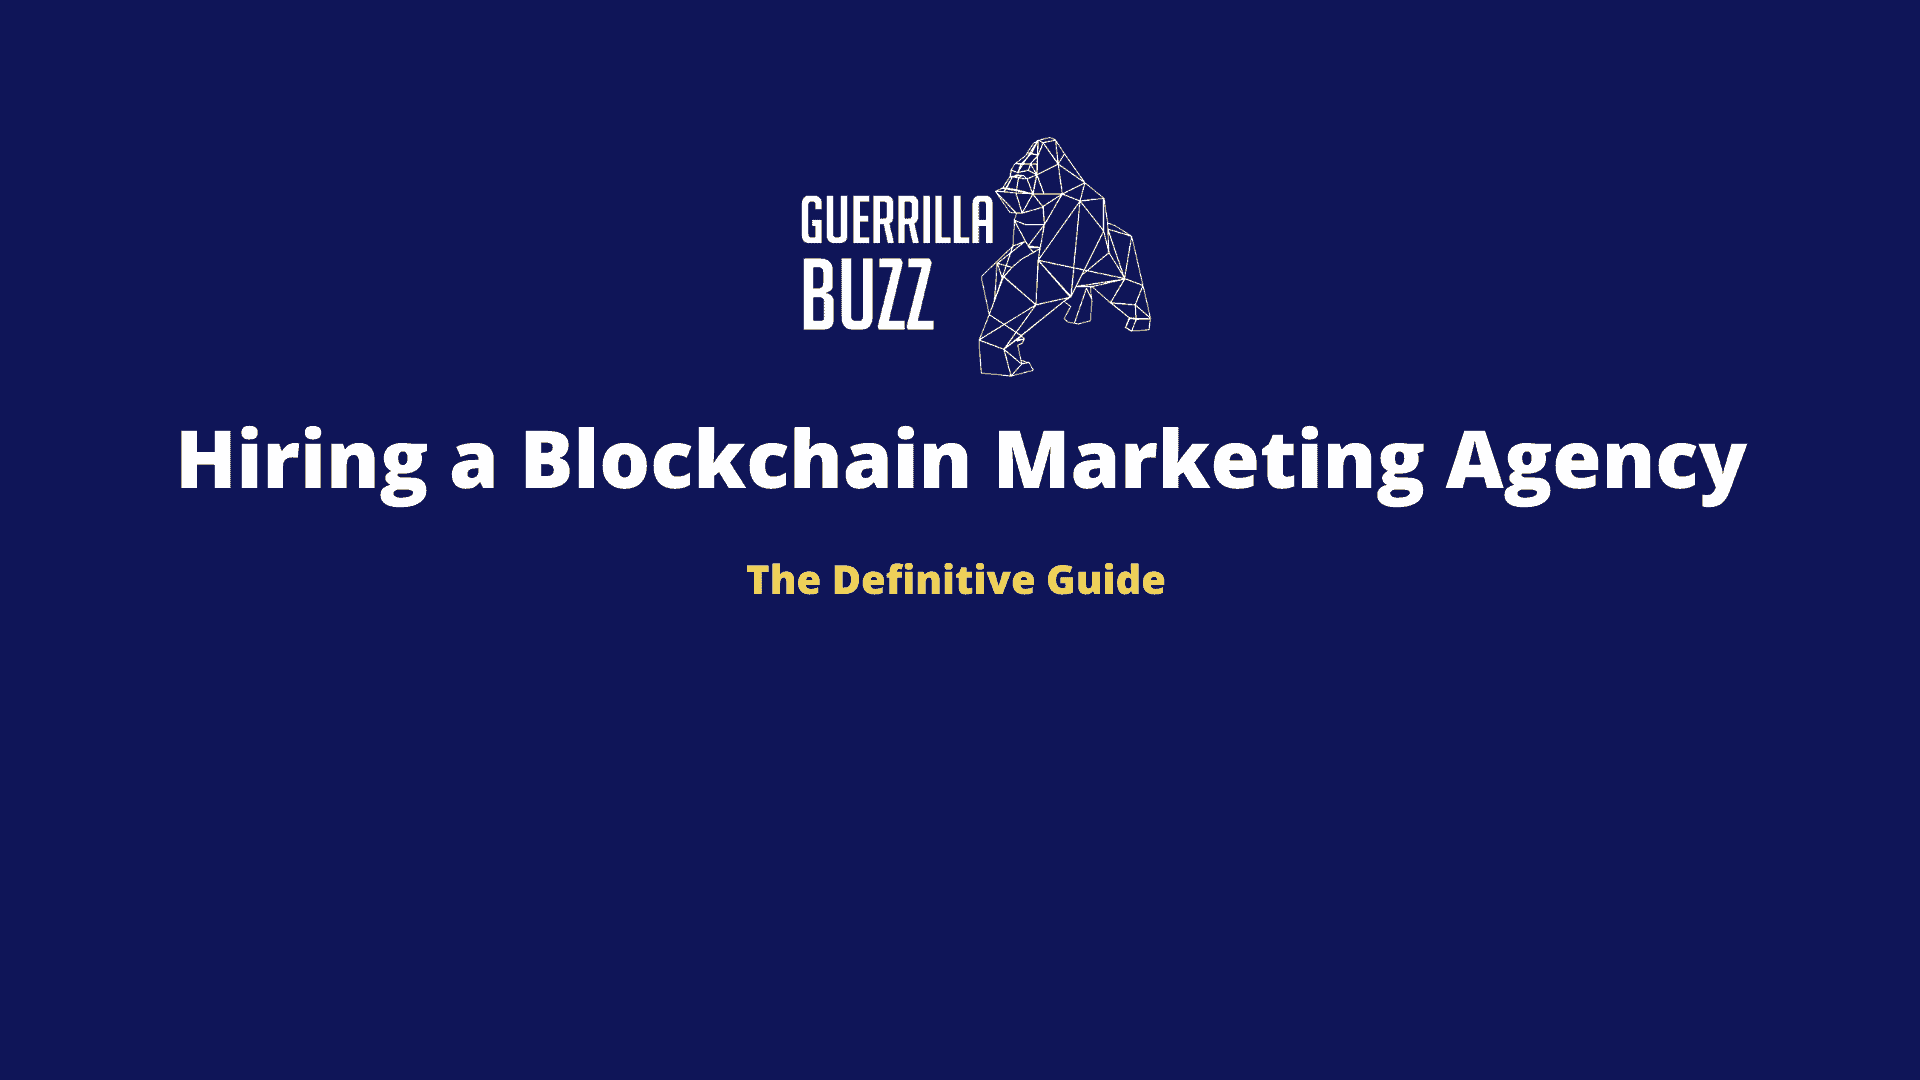 Hire Blockchain Marketing Agency Guide GuerrillaBuzz